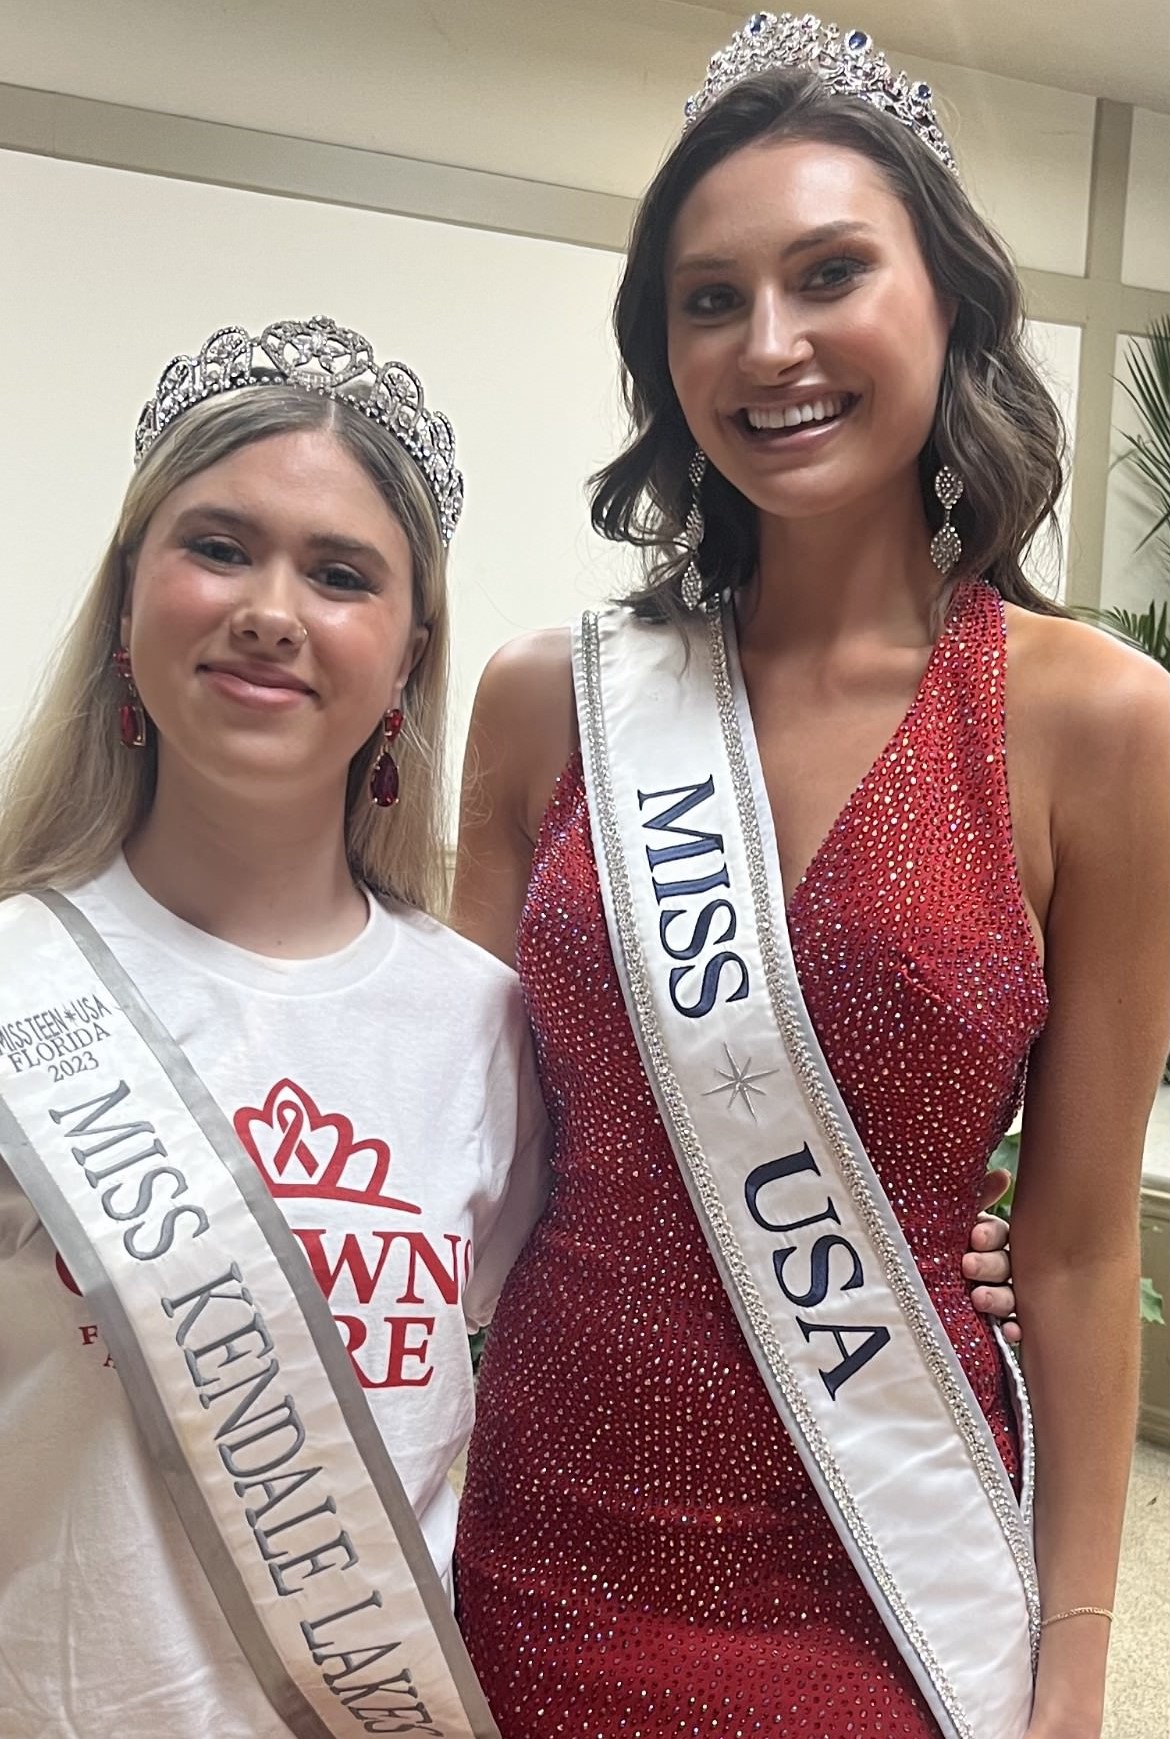 Madison Simon (left) poses with Miss USA